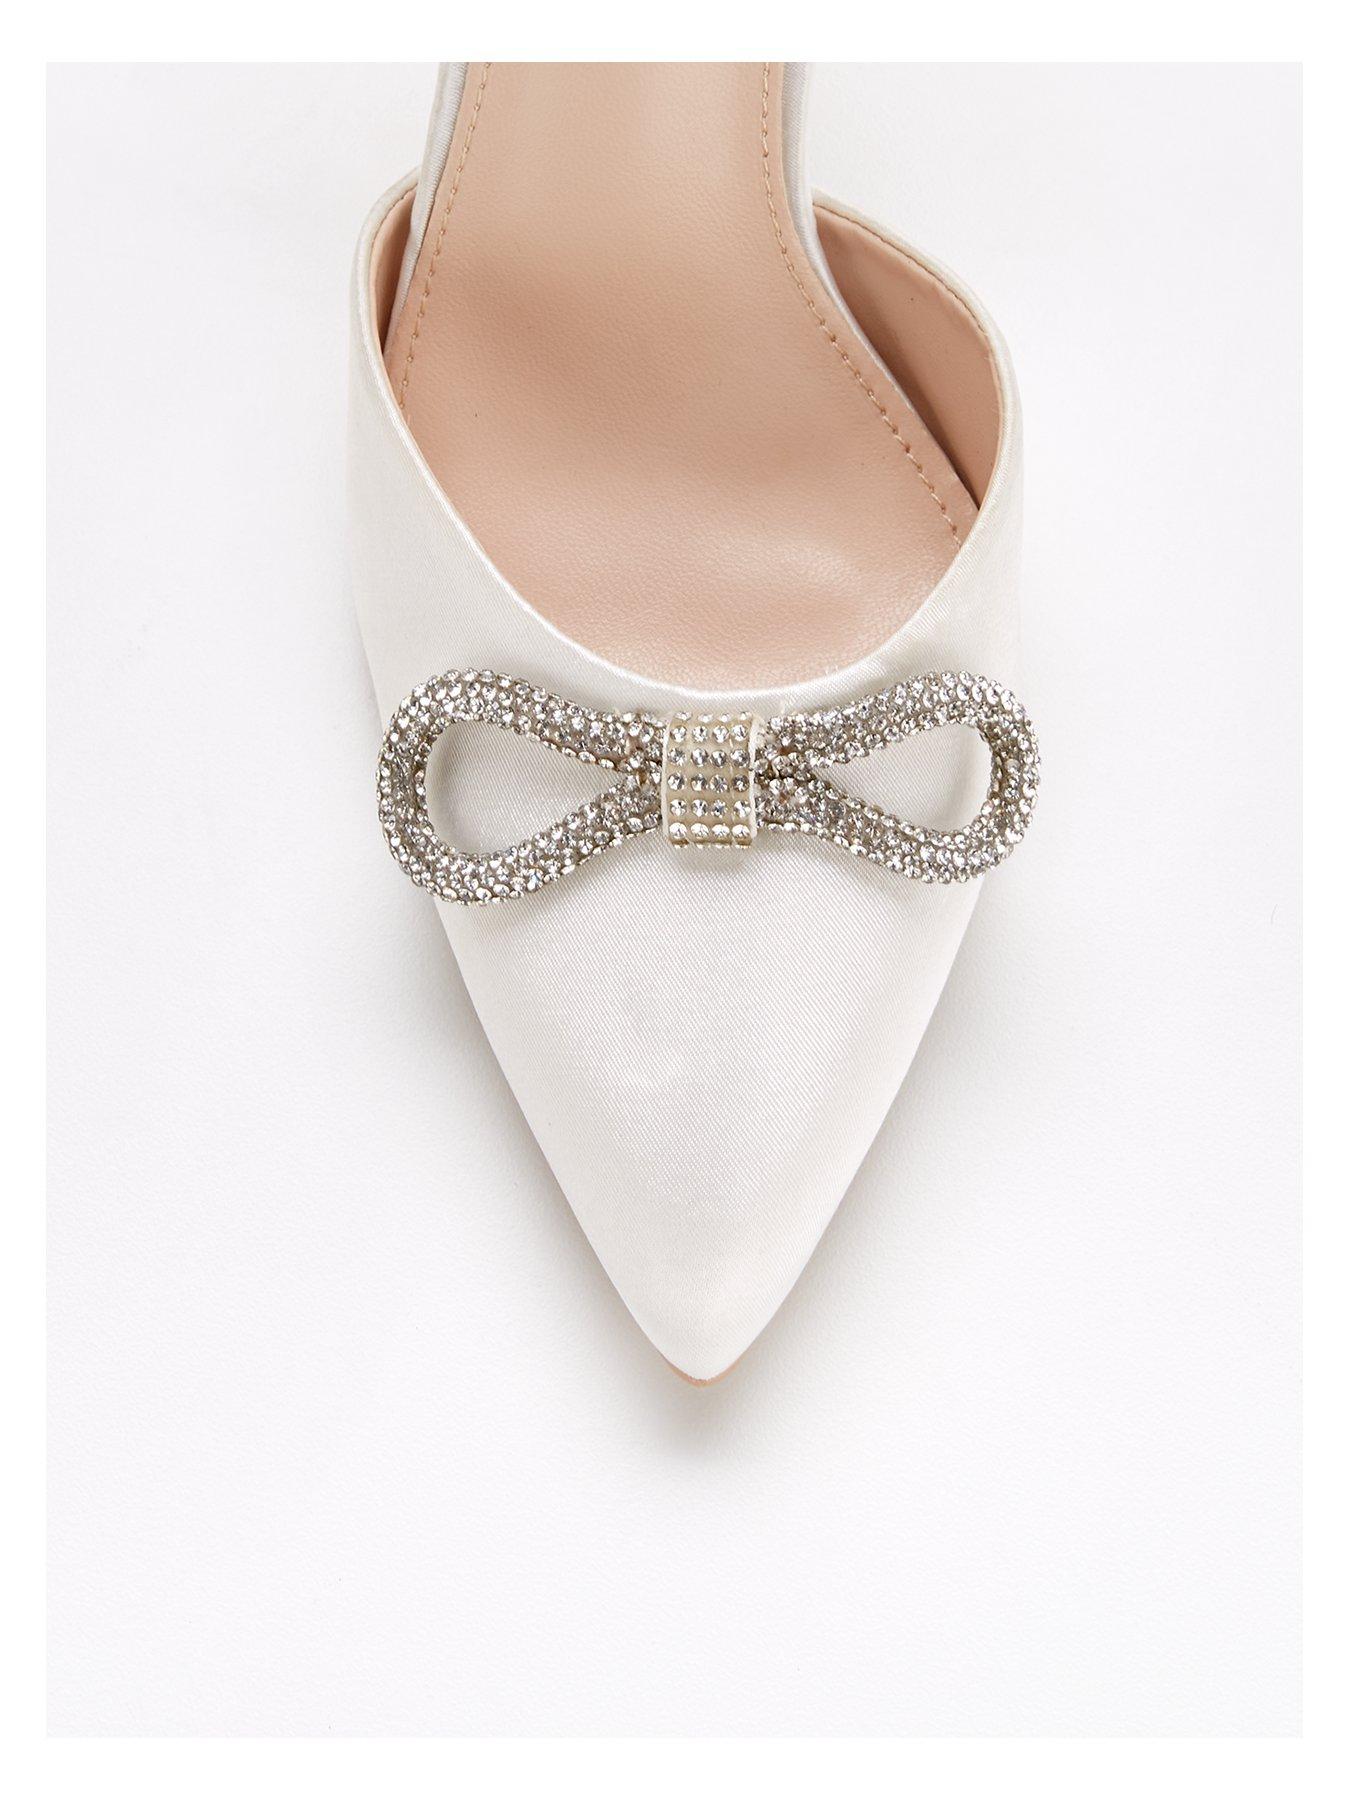 Shoes & boots Bridal Floycee Satin Heeled Shoe - Ivory